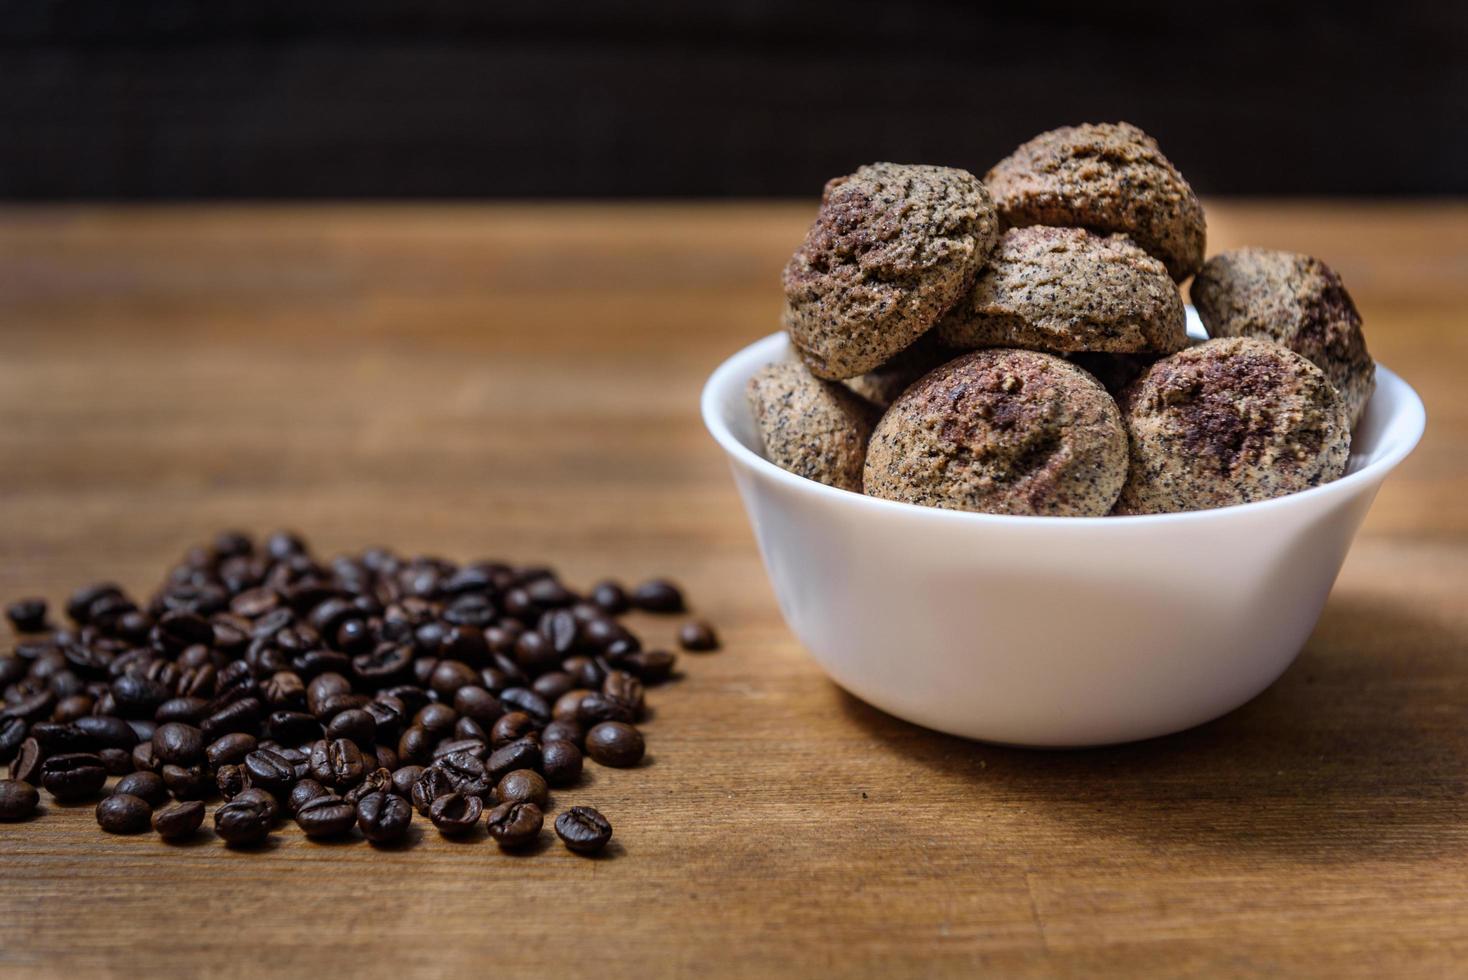 galletas de café en un plato con granos de café espolvoreados foto